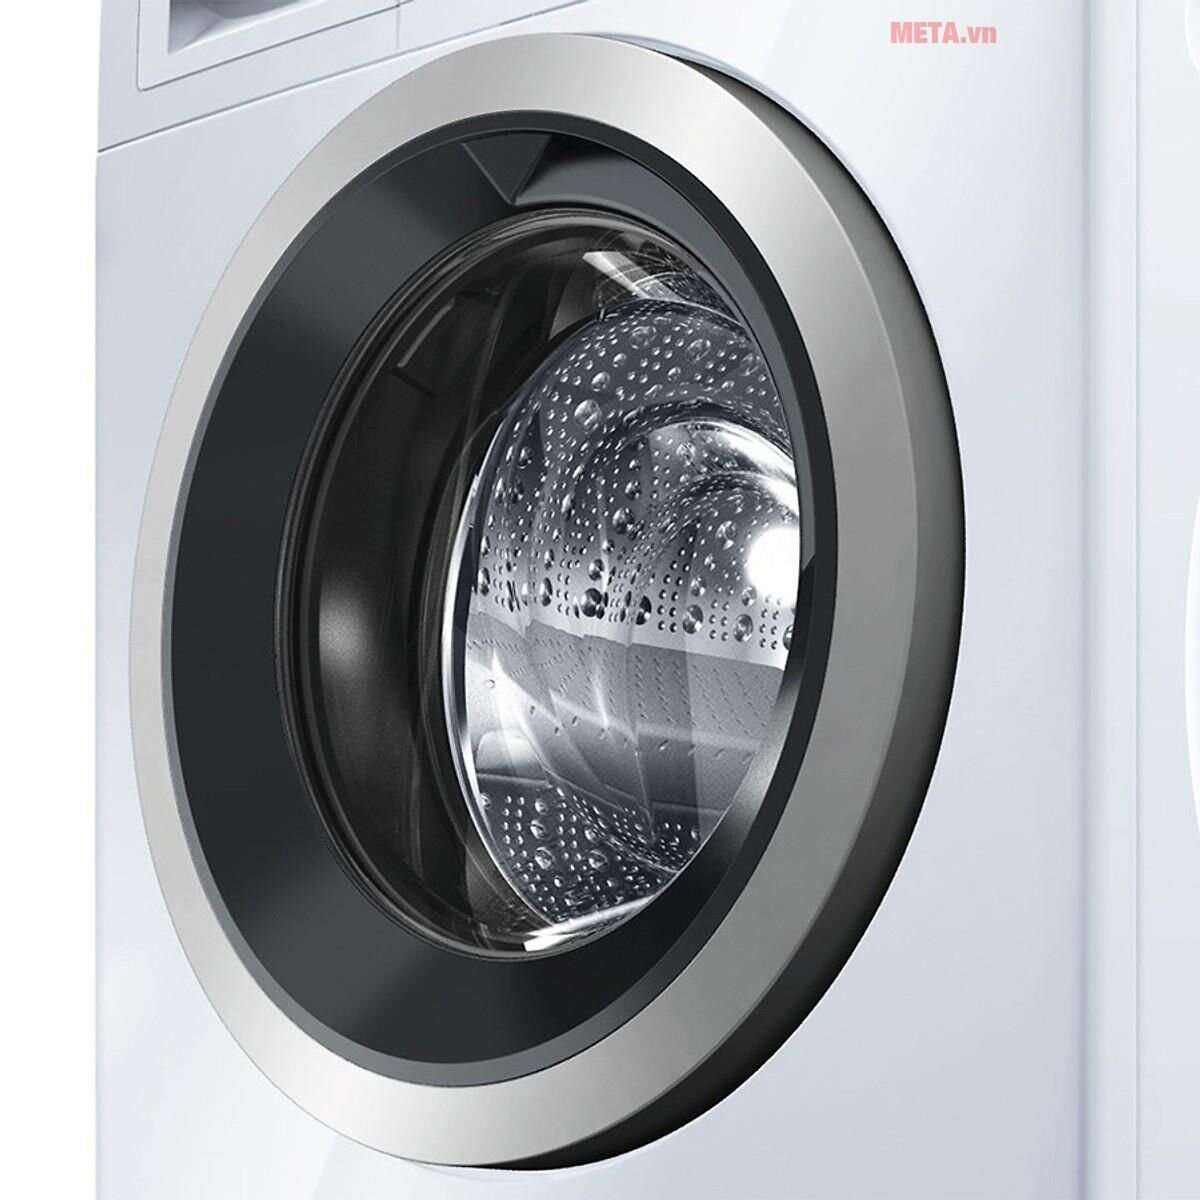 Máy giặt Bosch WAW28480SG (539.96.130) - 9kg. Giá từ 16.845.000 ₫ - 102 nơi bán.